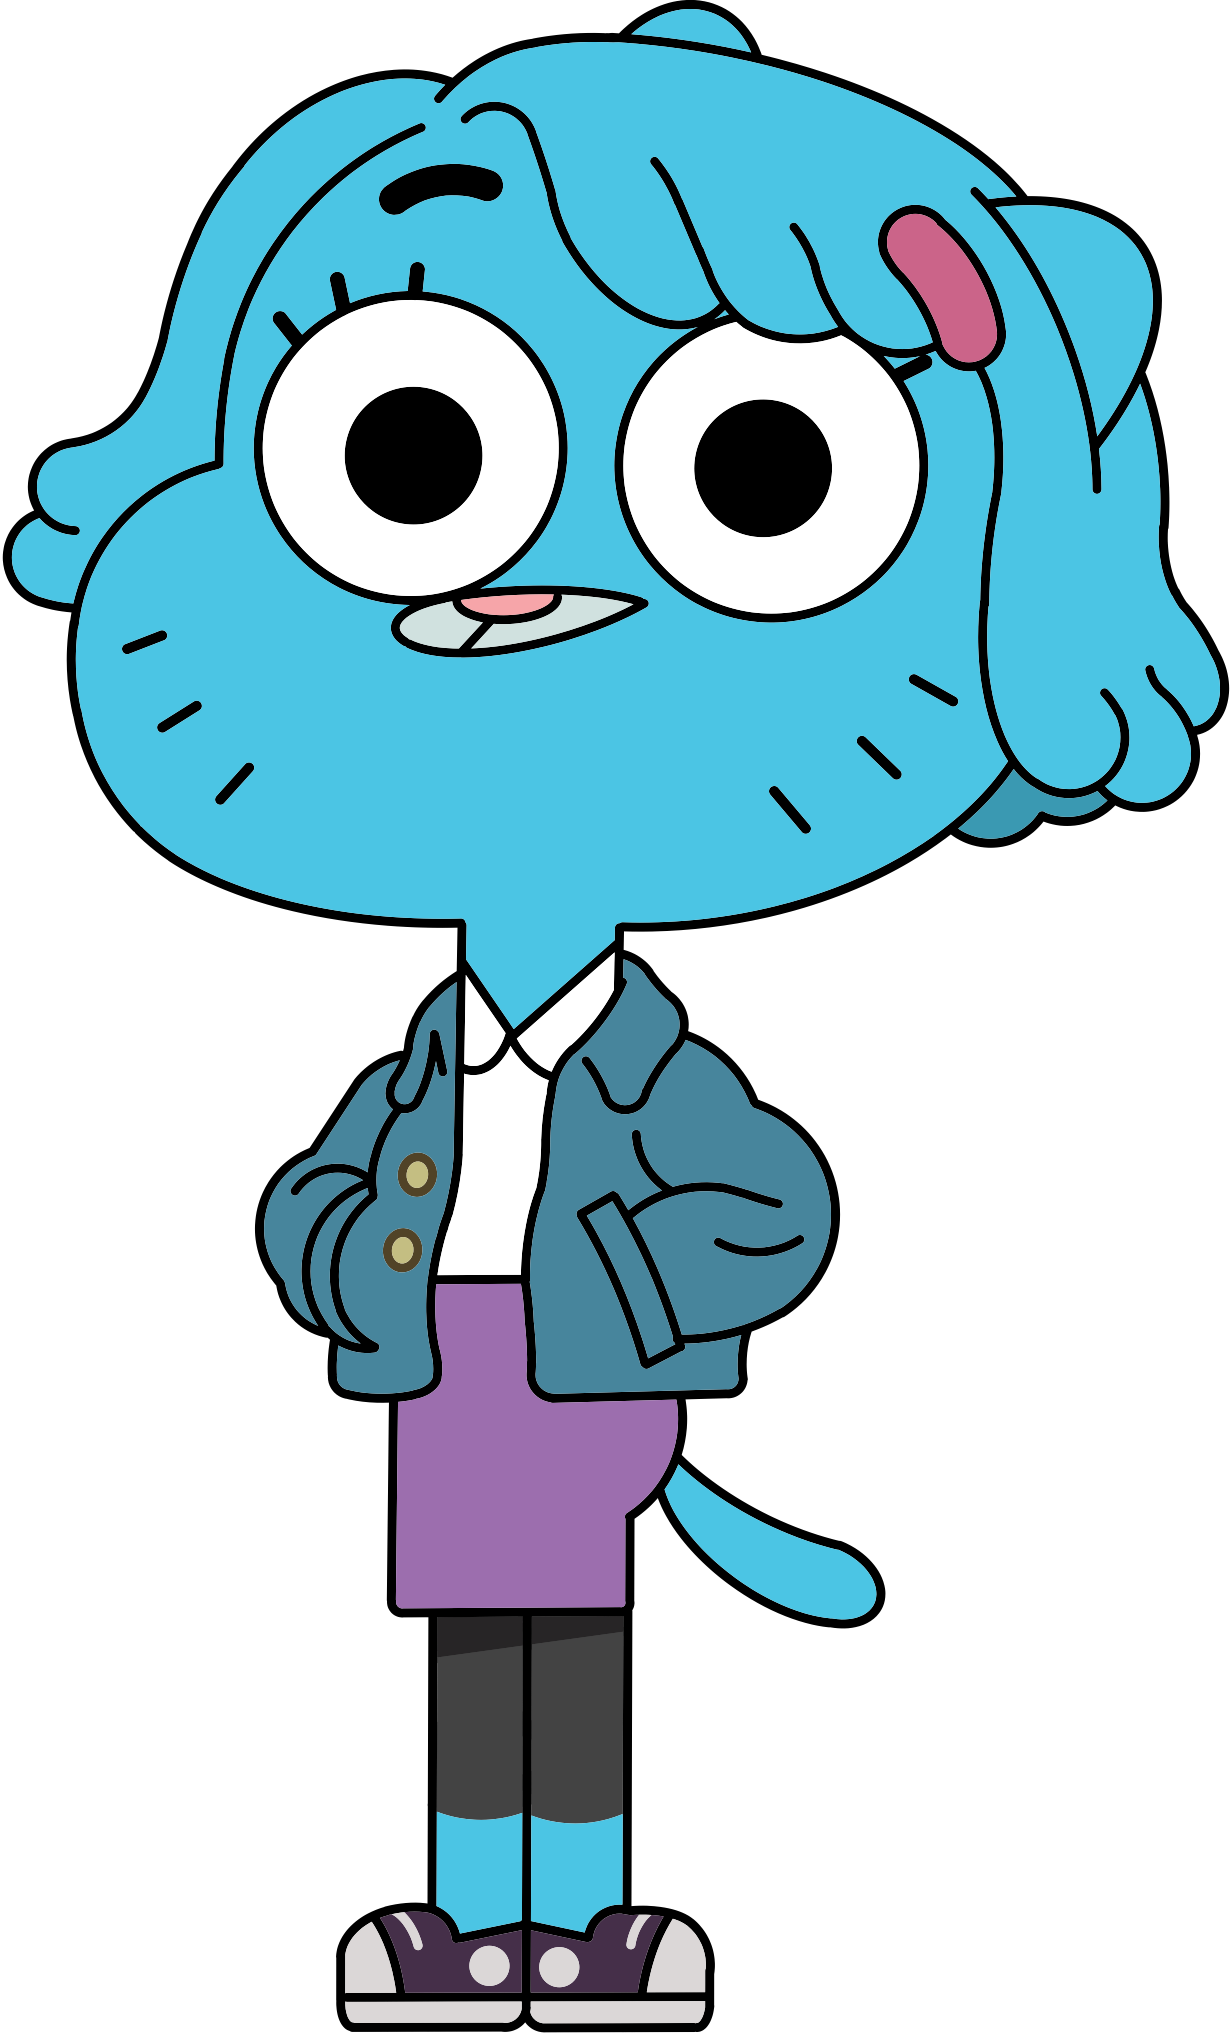 Meet Gumball: Your New Favorite Cartoon Character